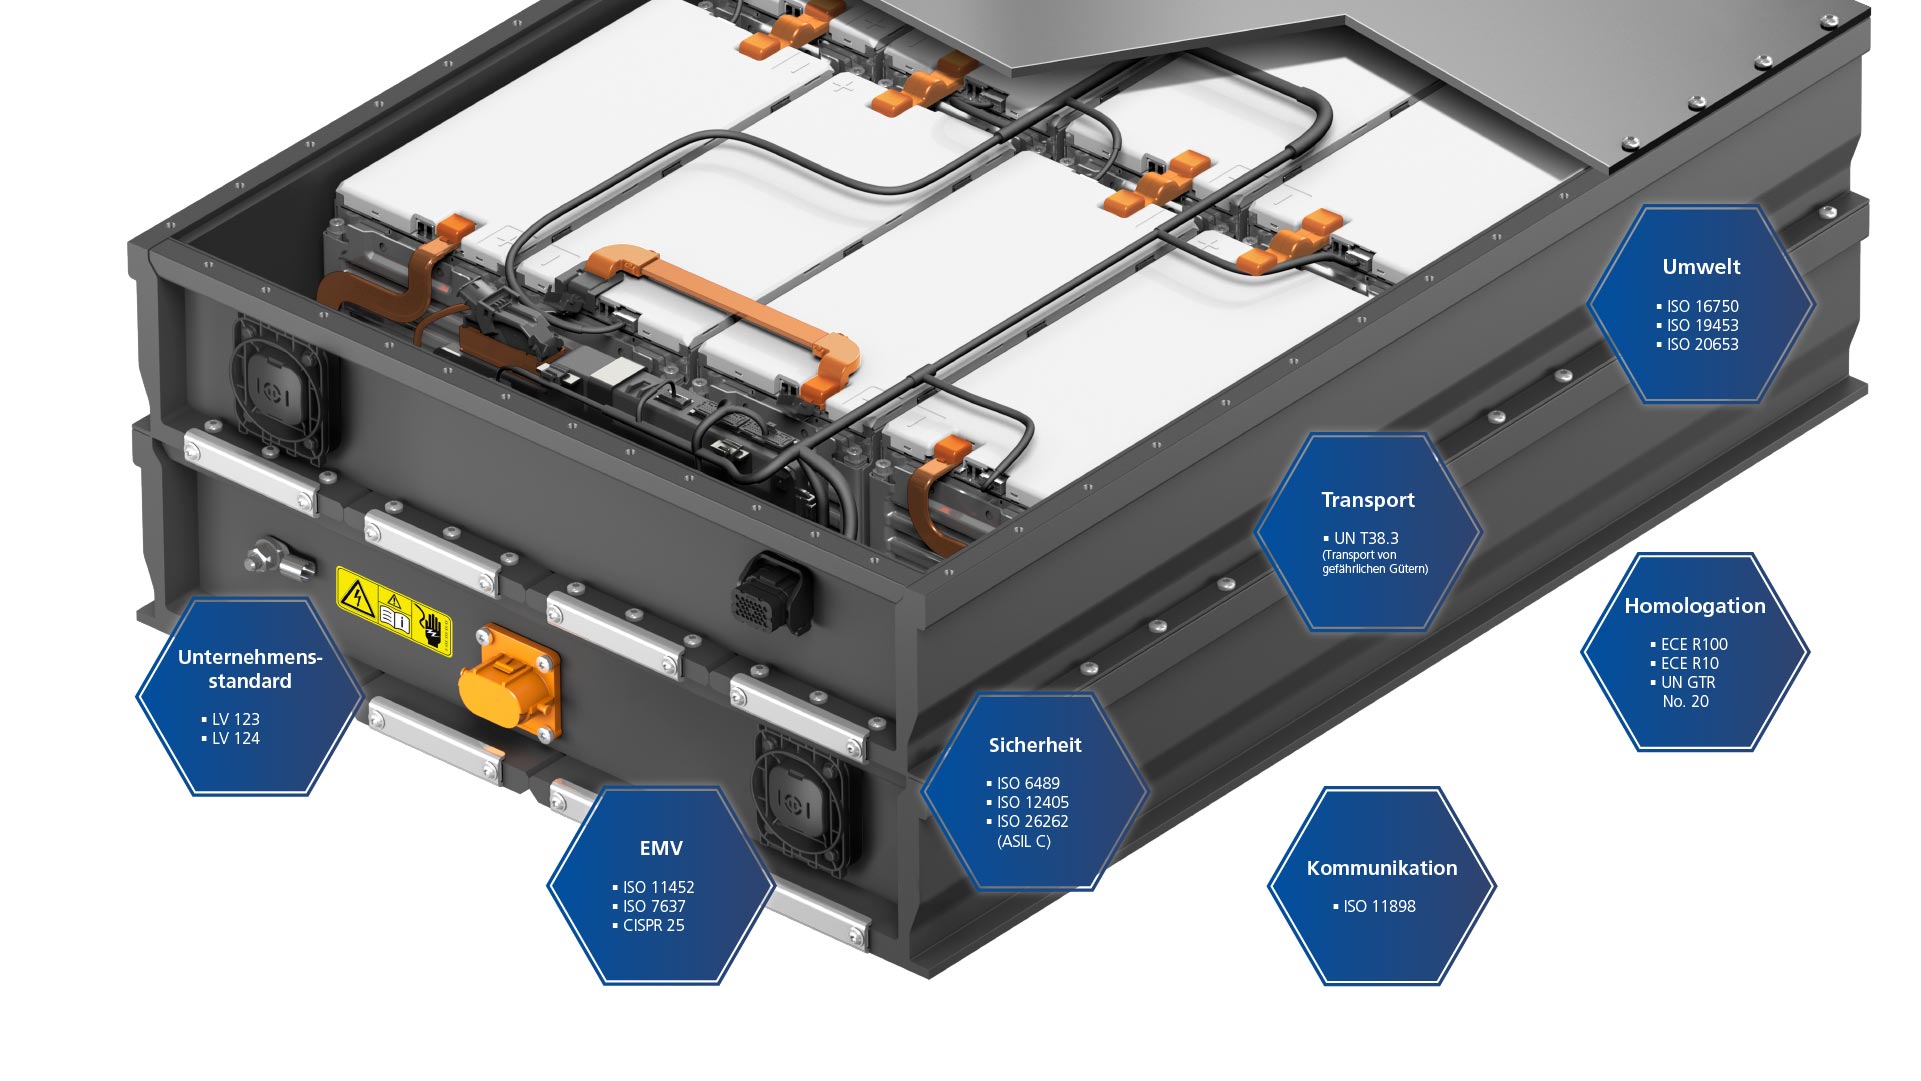 Webasto Batterieloesungen Standardbatteriesysteme fuer Lkw Lastkraftwagen Infografik technische Details